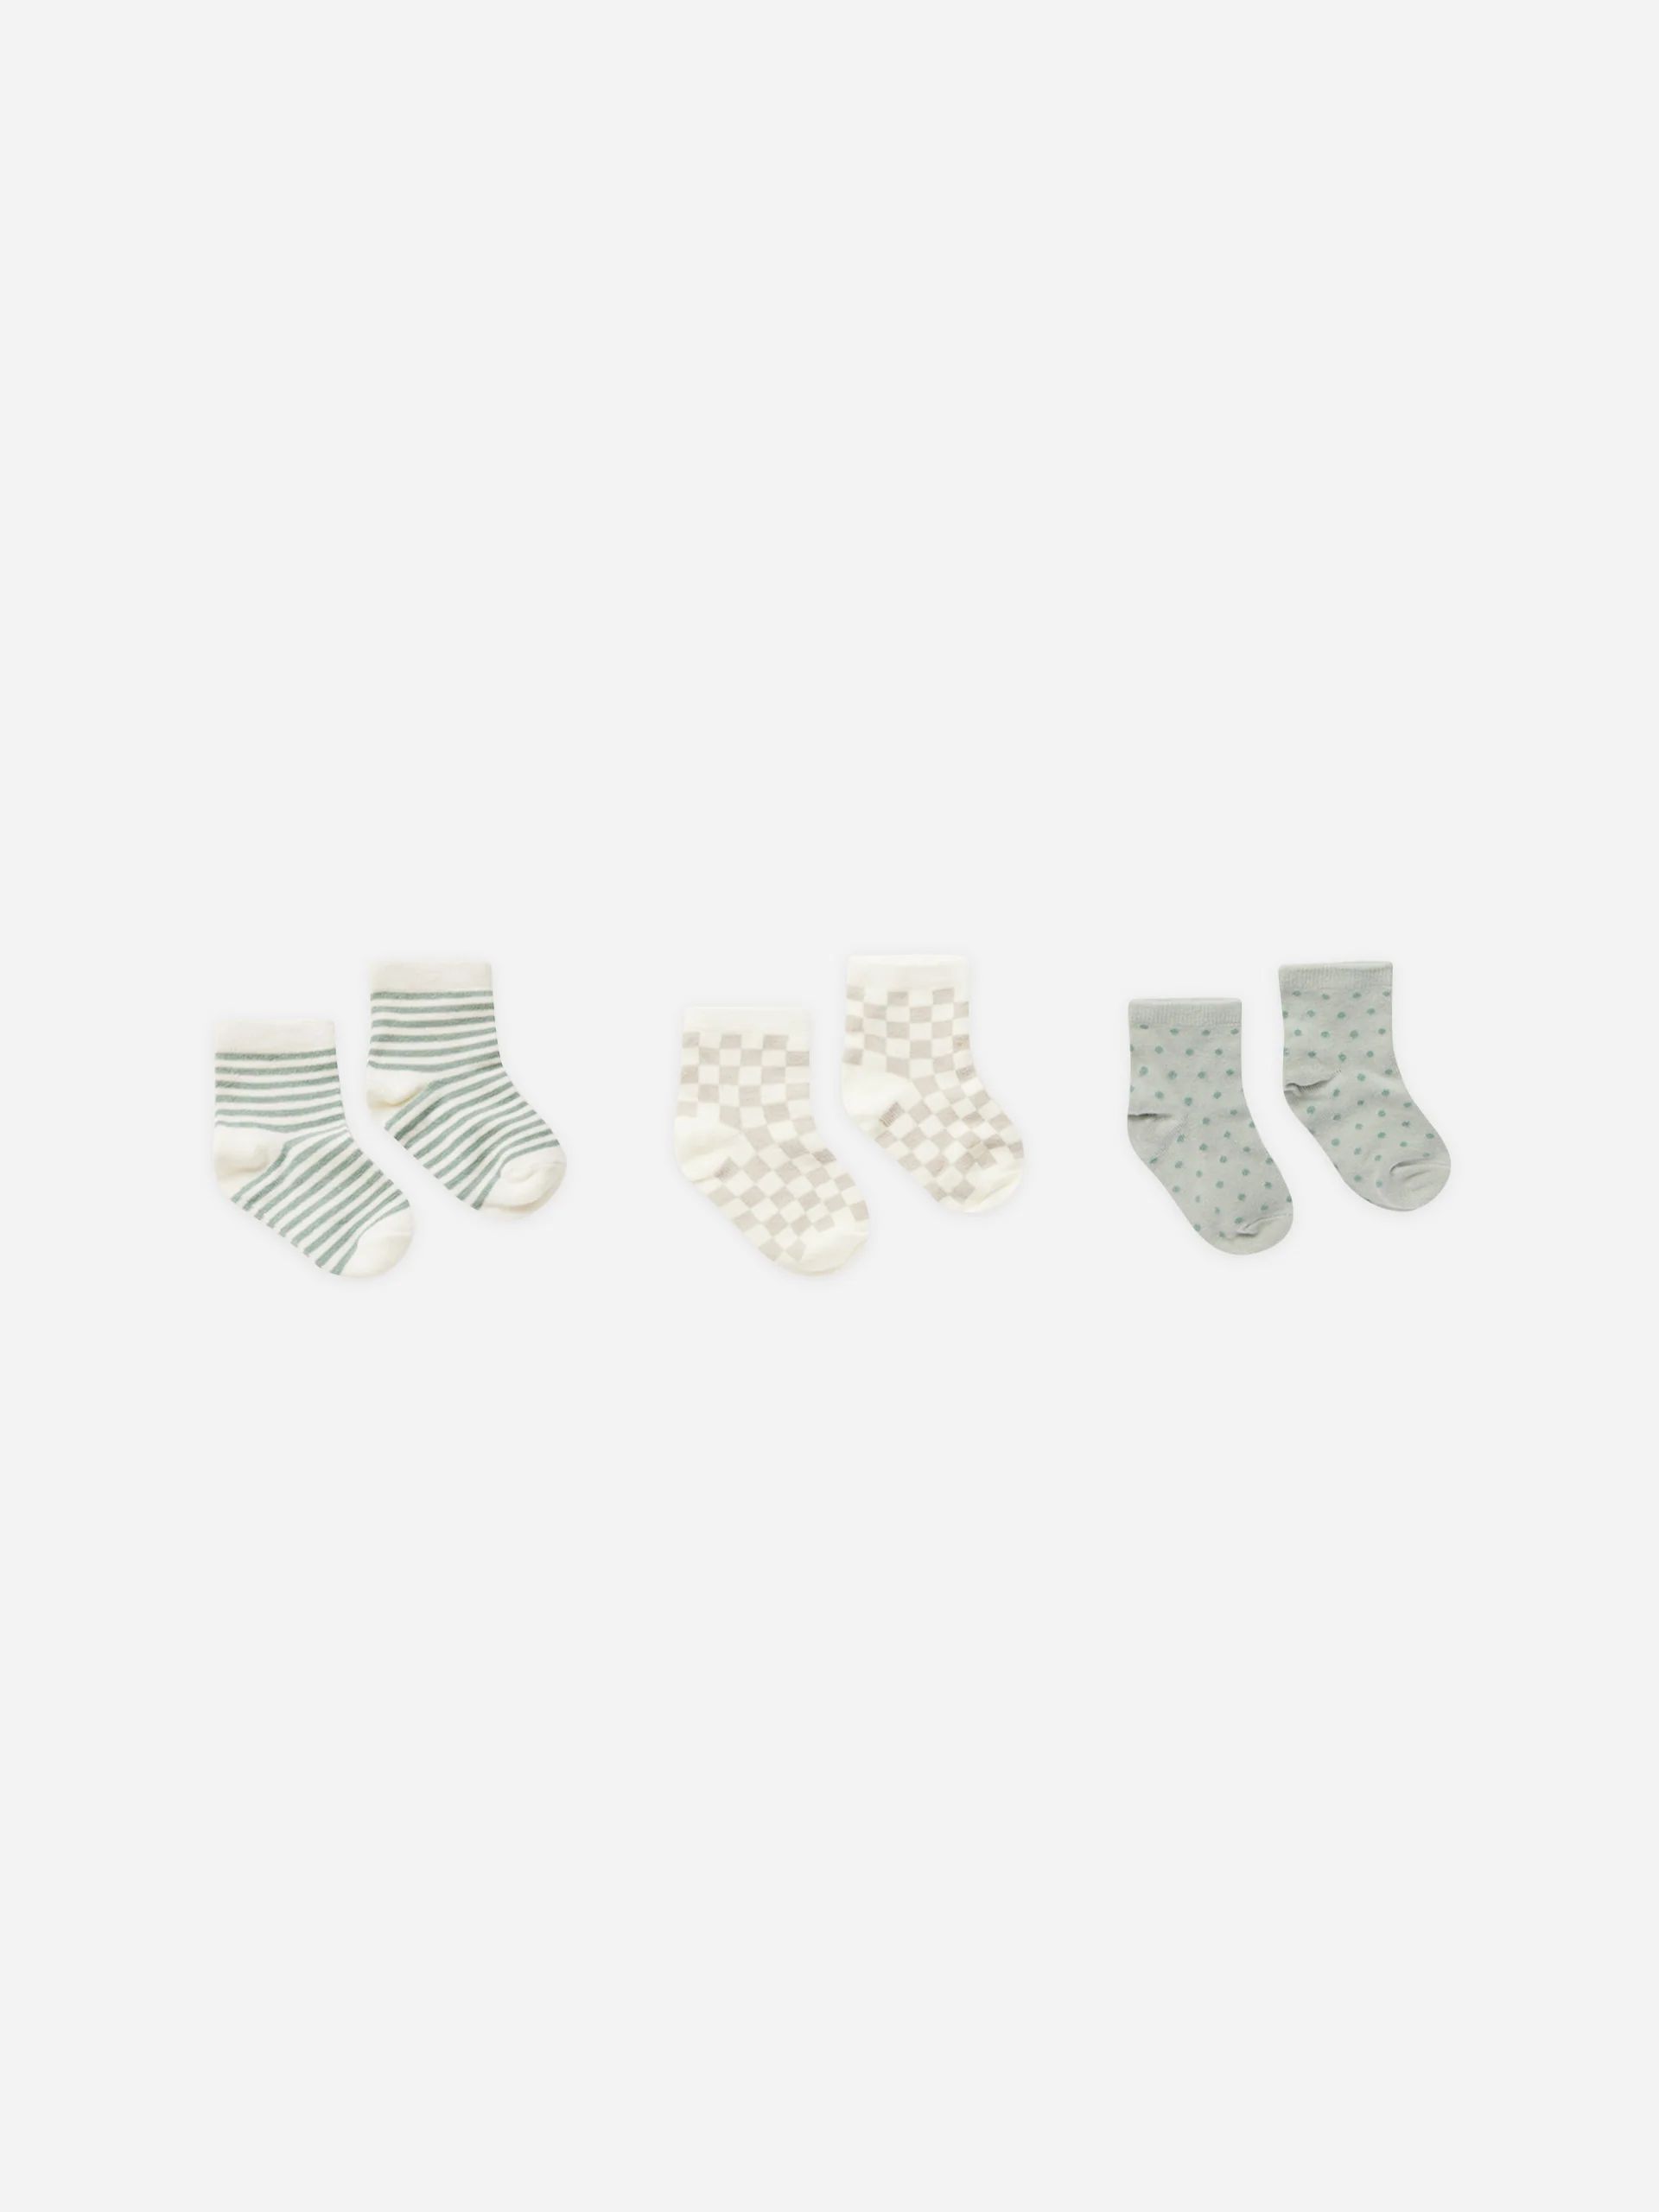 Printed Socks || Summer Stripe, Dove Check, Polka Dot | Rylee + Cru